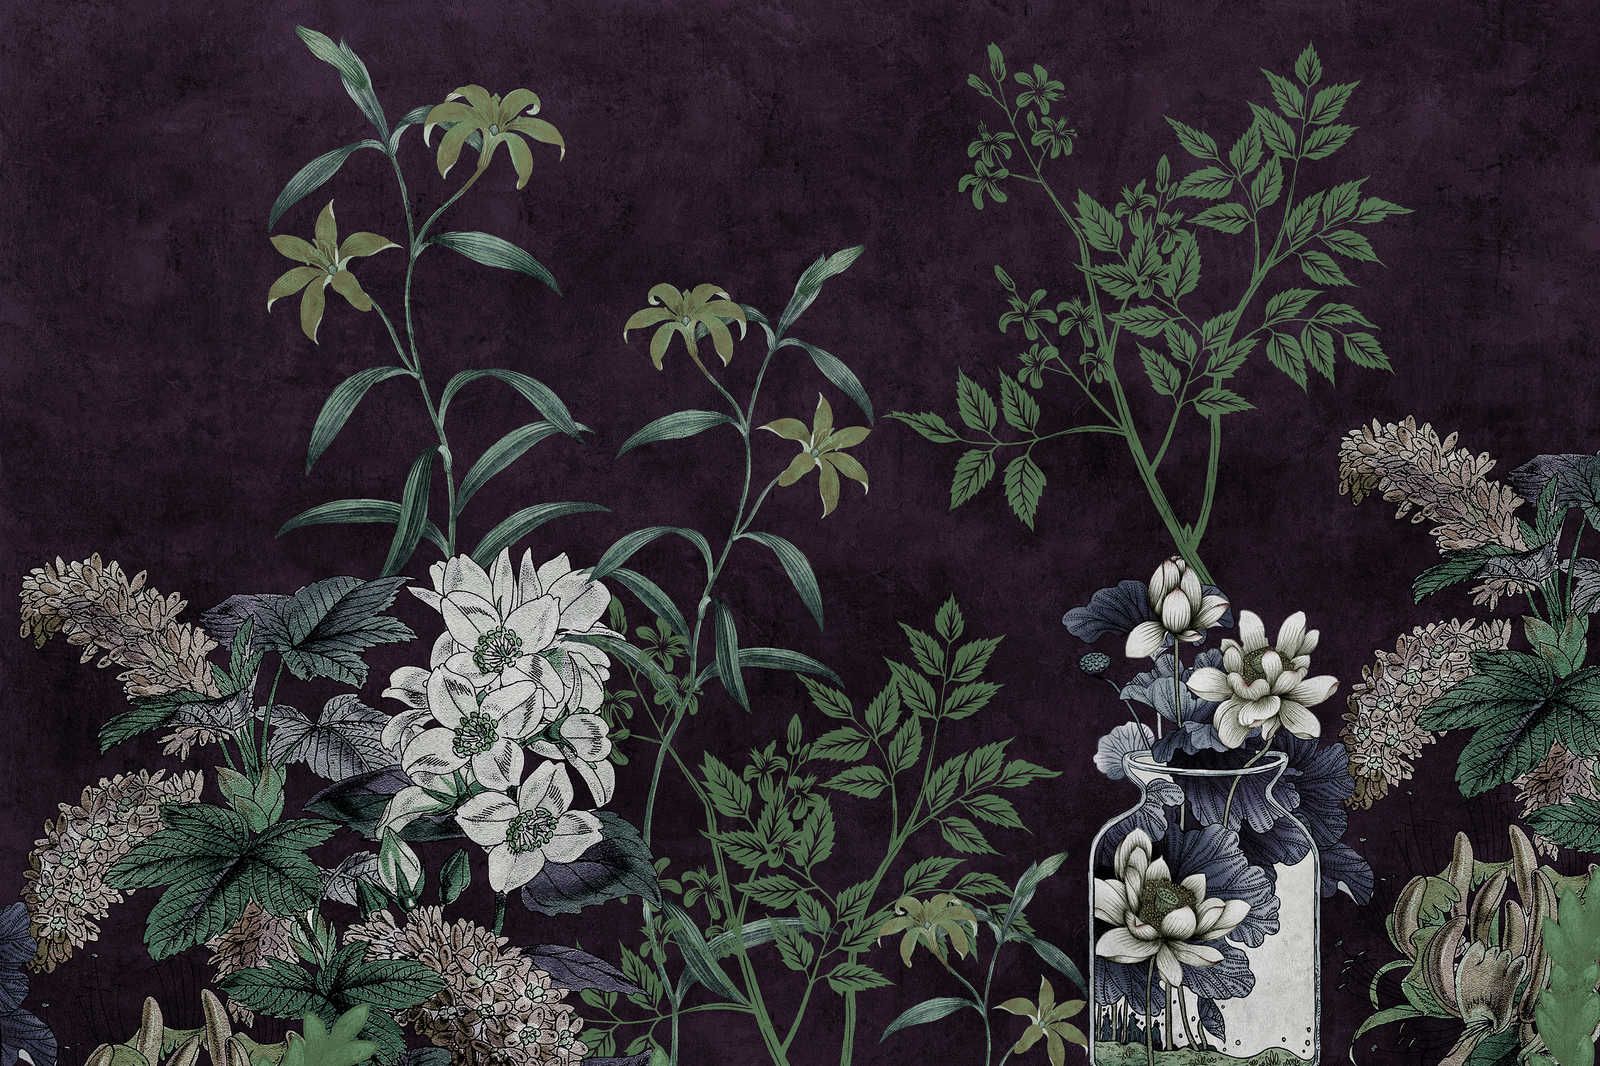             Dark Room 1 - Zwart Canvas Schilderij Botanisch Patroon Groen - 1.20 m x 0.80 m
        